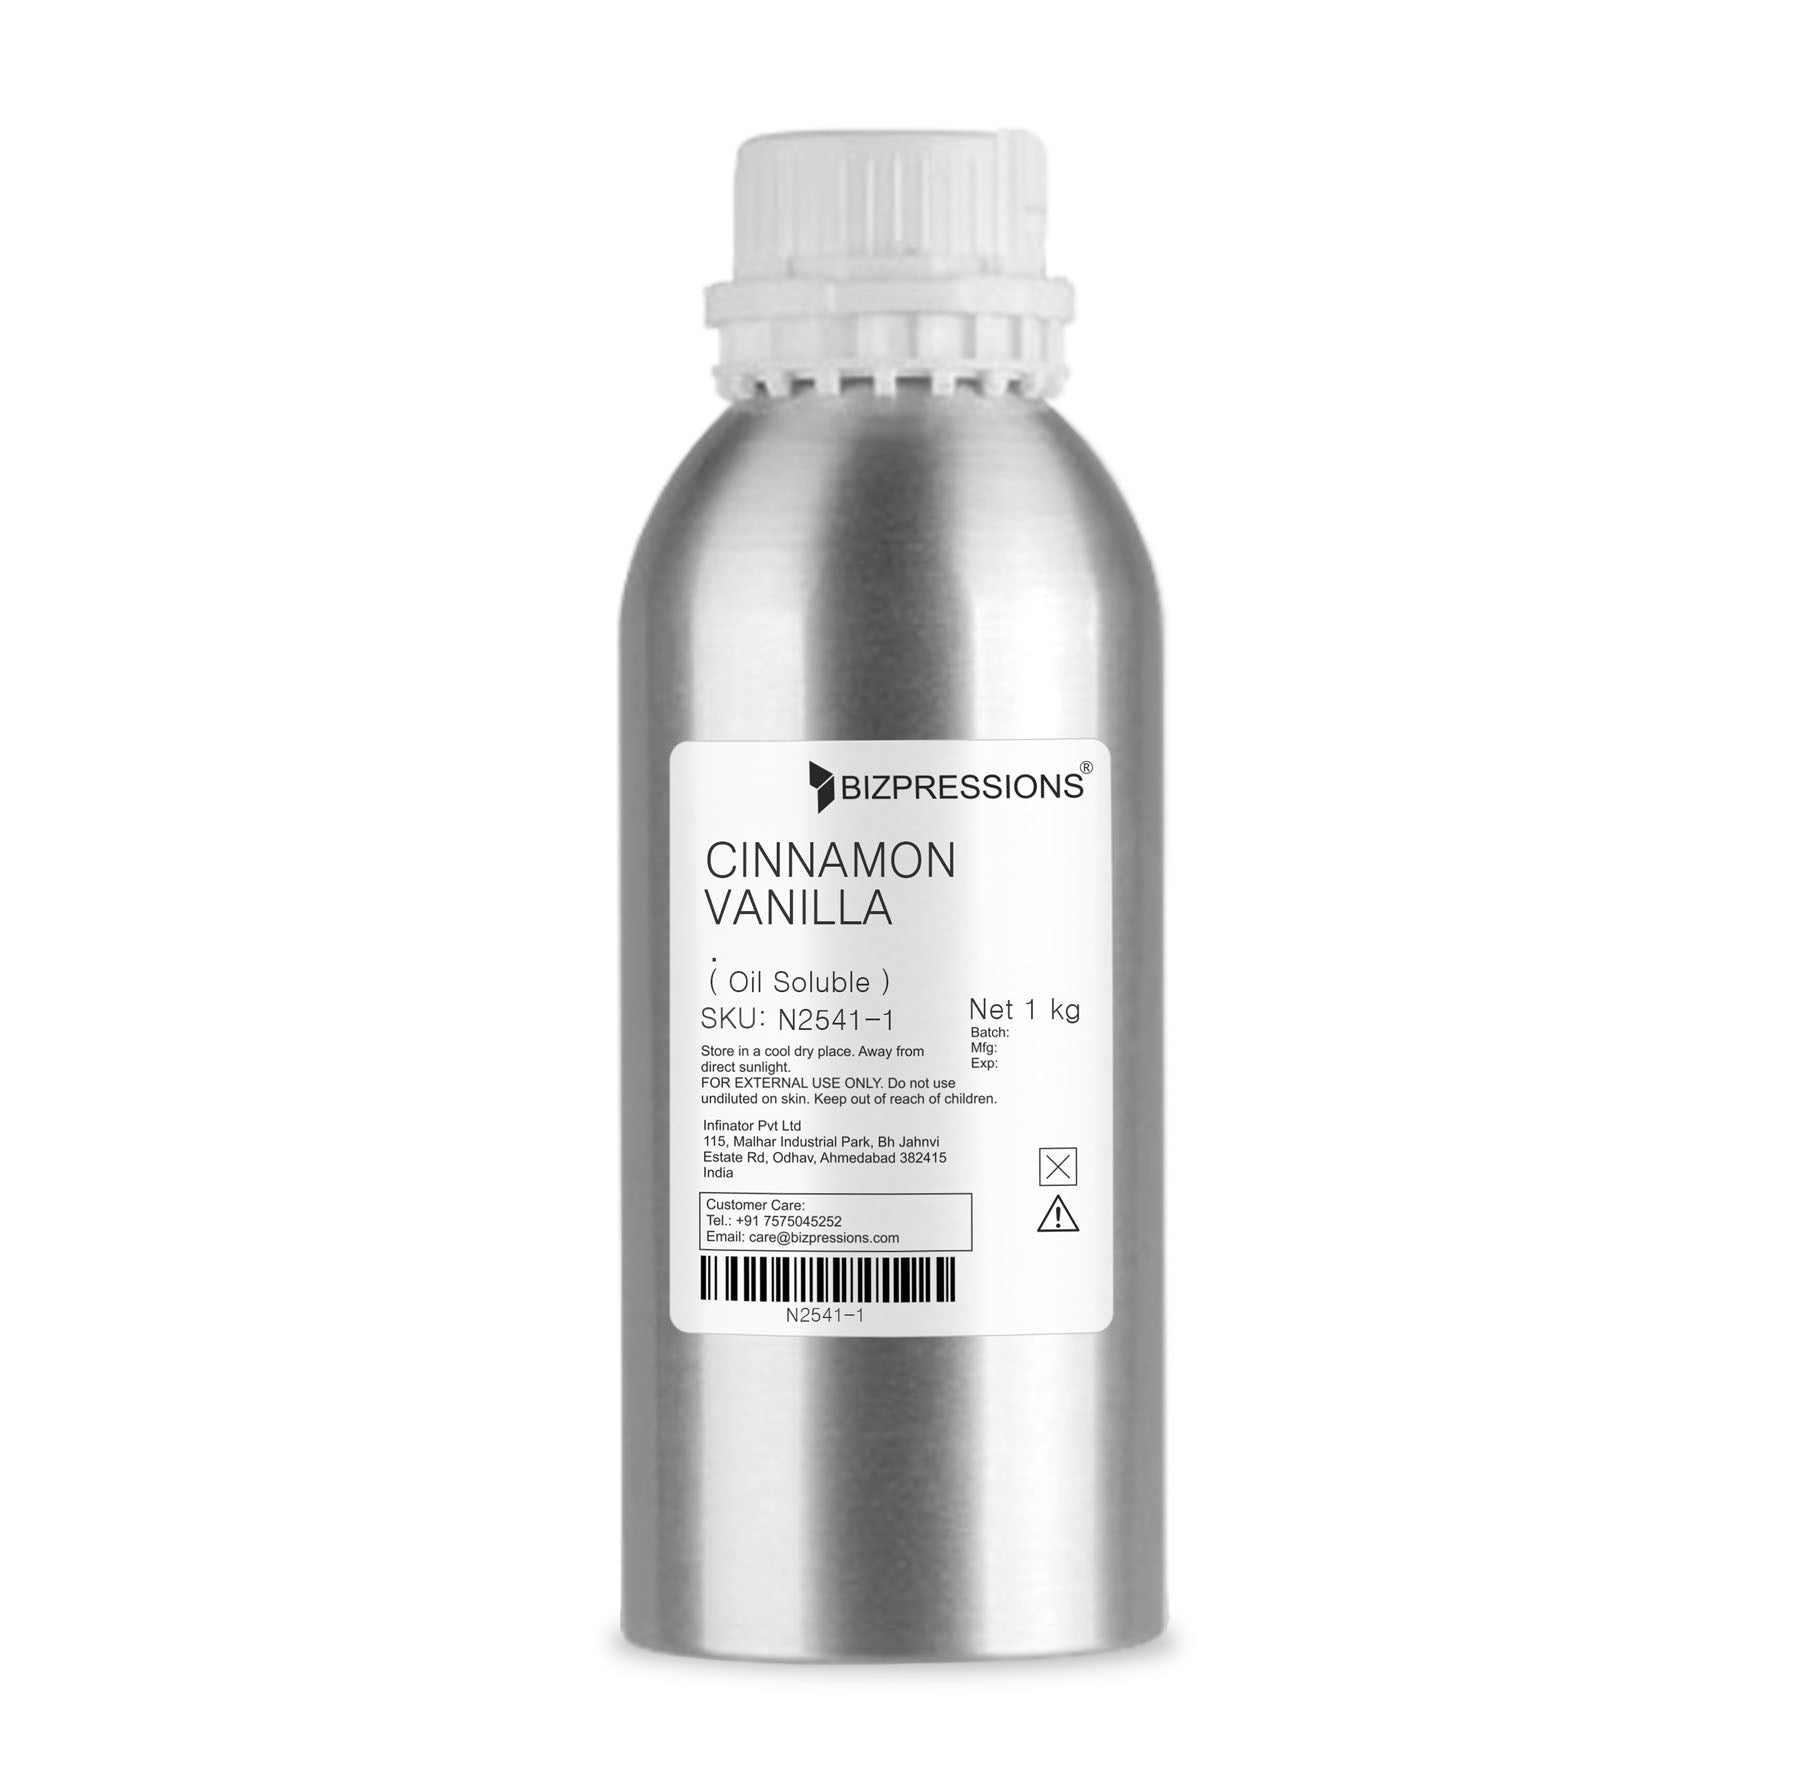 CINNAMON VANILLA - Fragrance ( Oil Soluble )